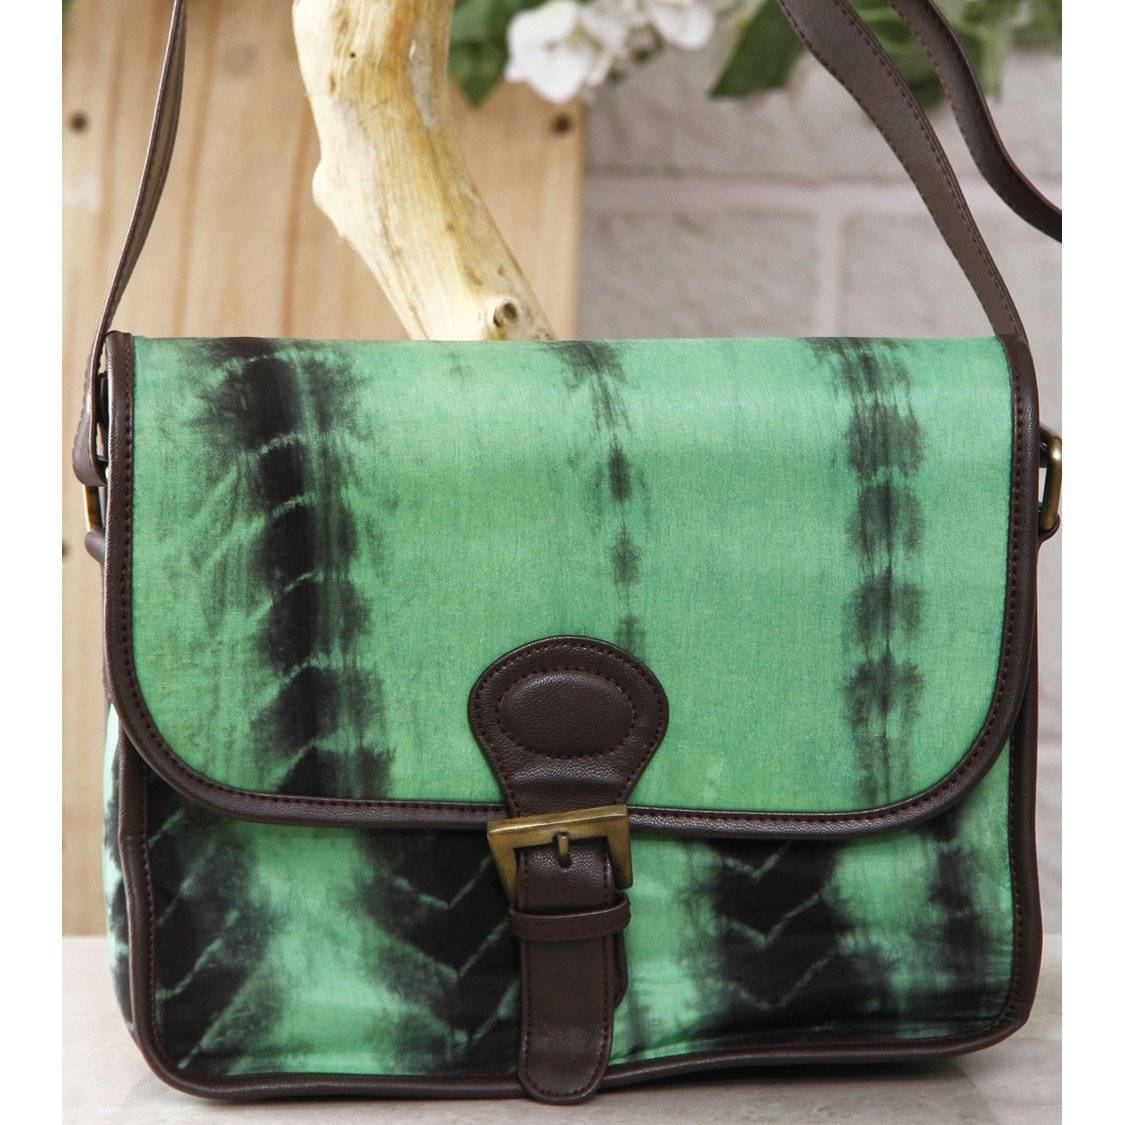 Green & Black Tie Dyed Suede Sling Bag (100000052937)